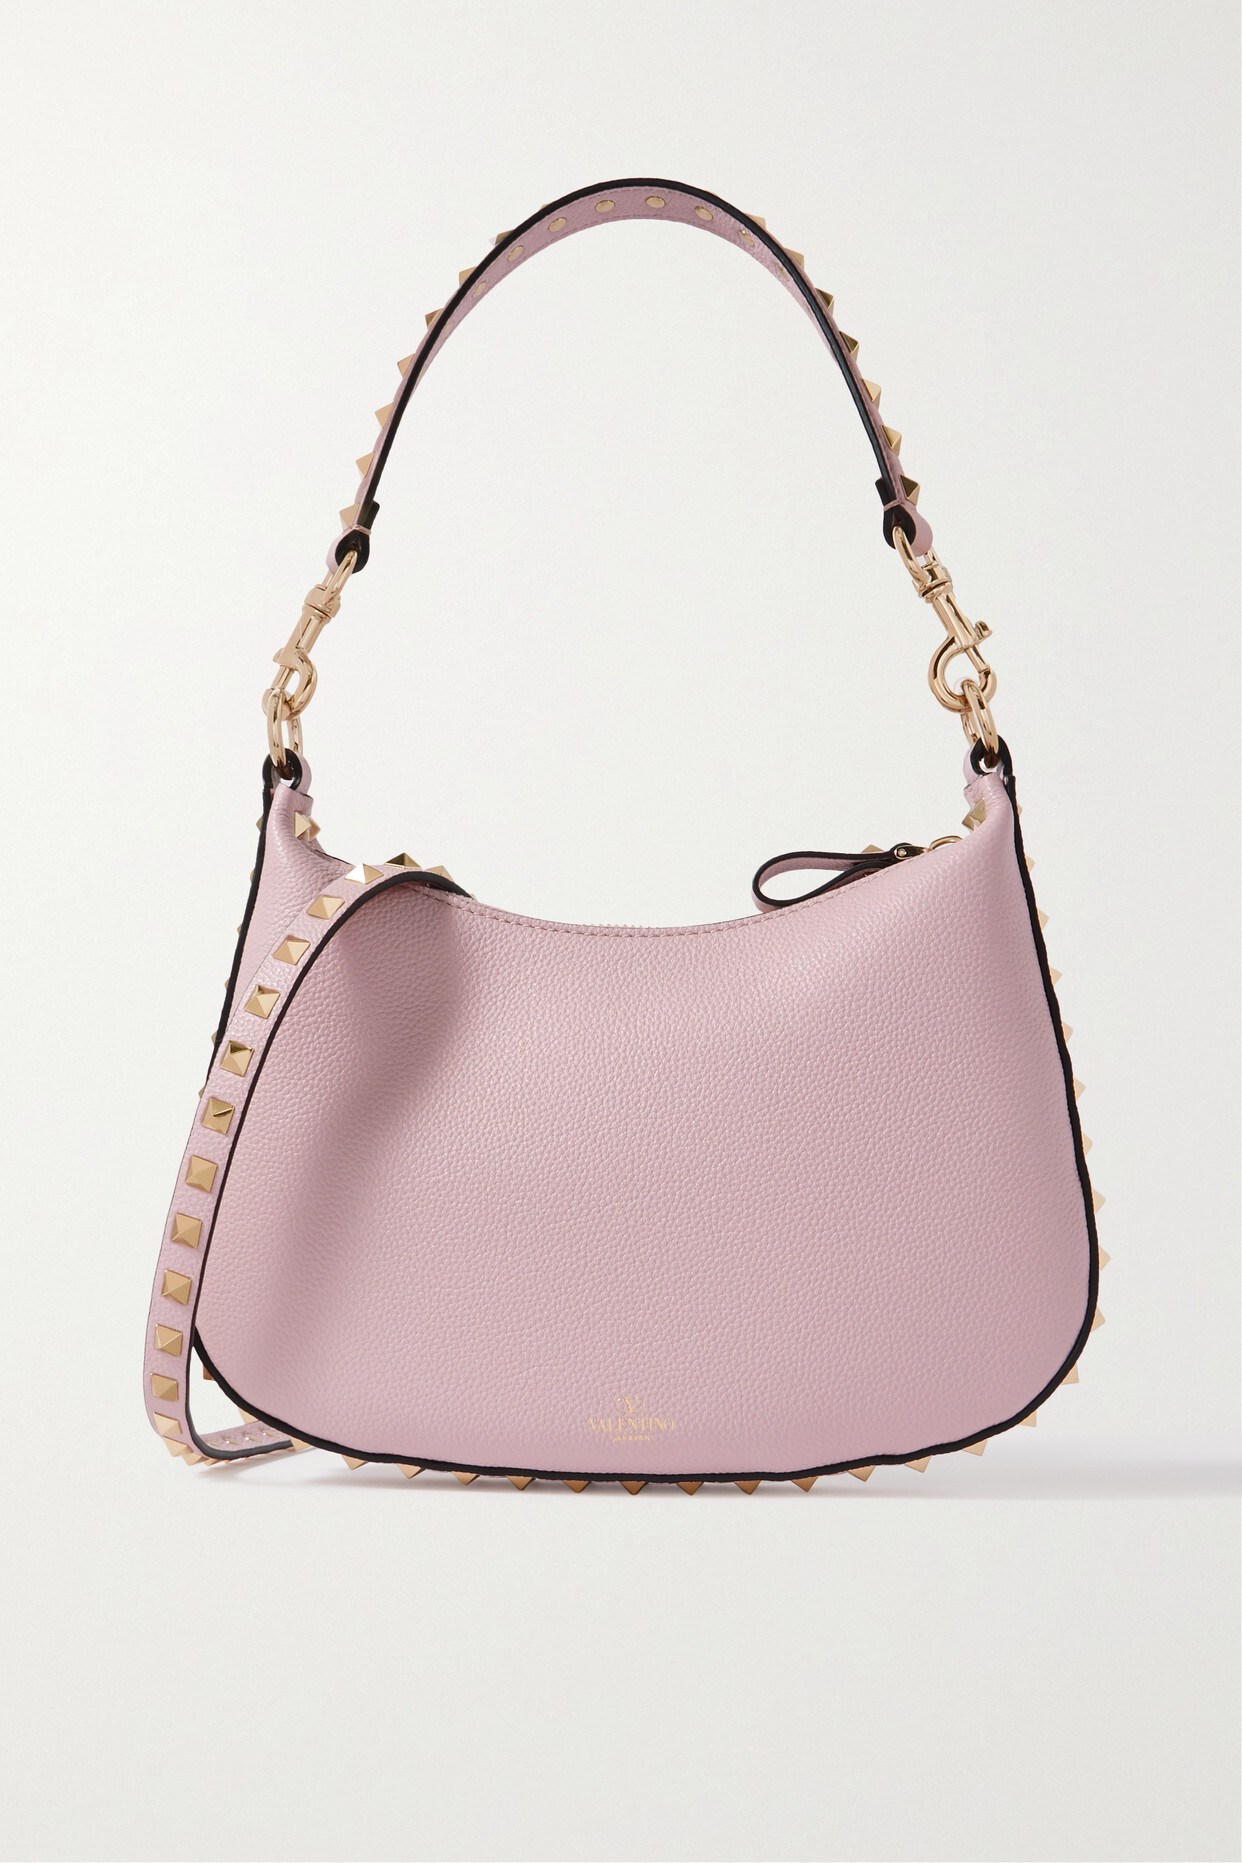 Valentino Garavani - Rockstud Small Textured-leather Shoulder Bag - Pink